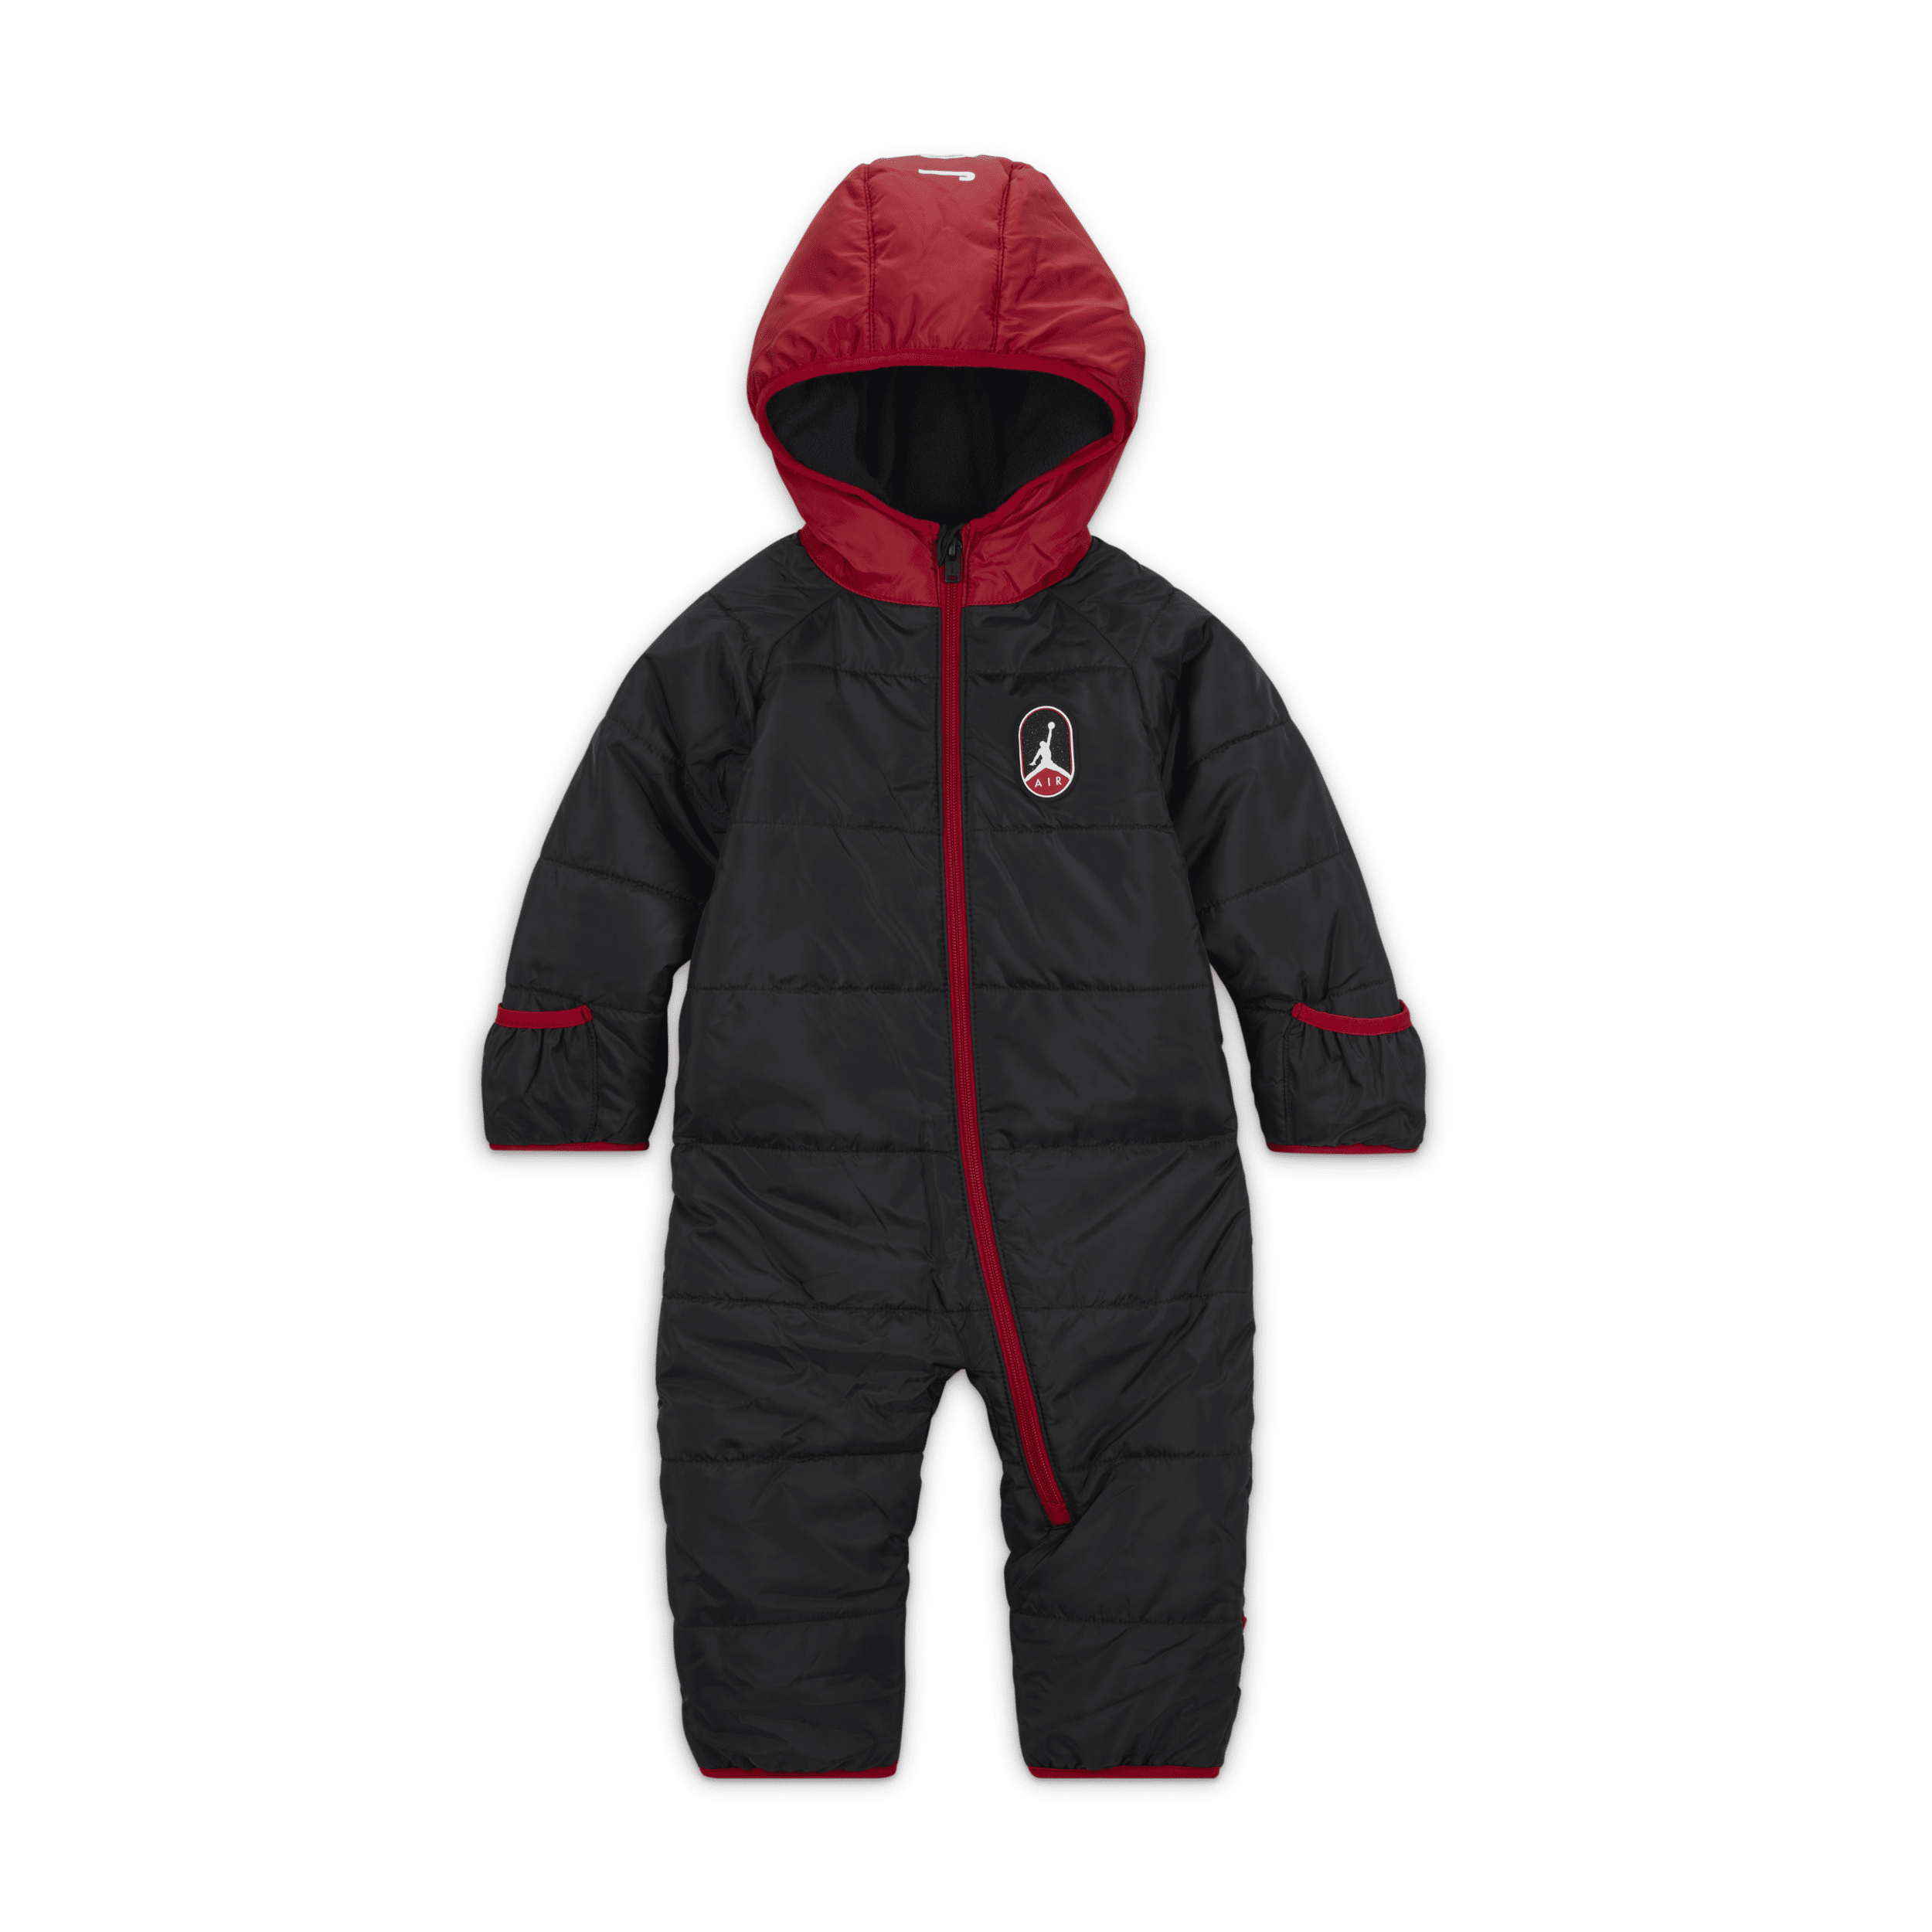 Jordan Baby Snowsuit Baby (12-24m) Snowsuit In Black